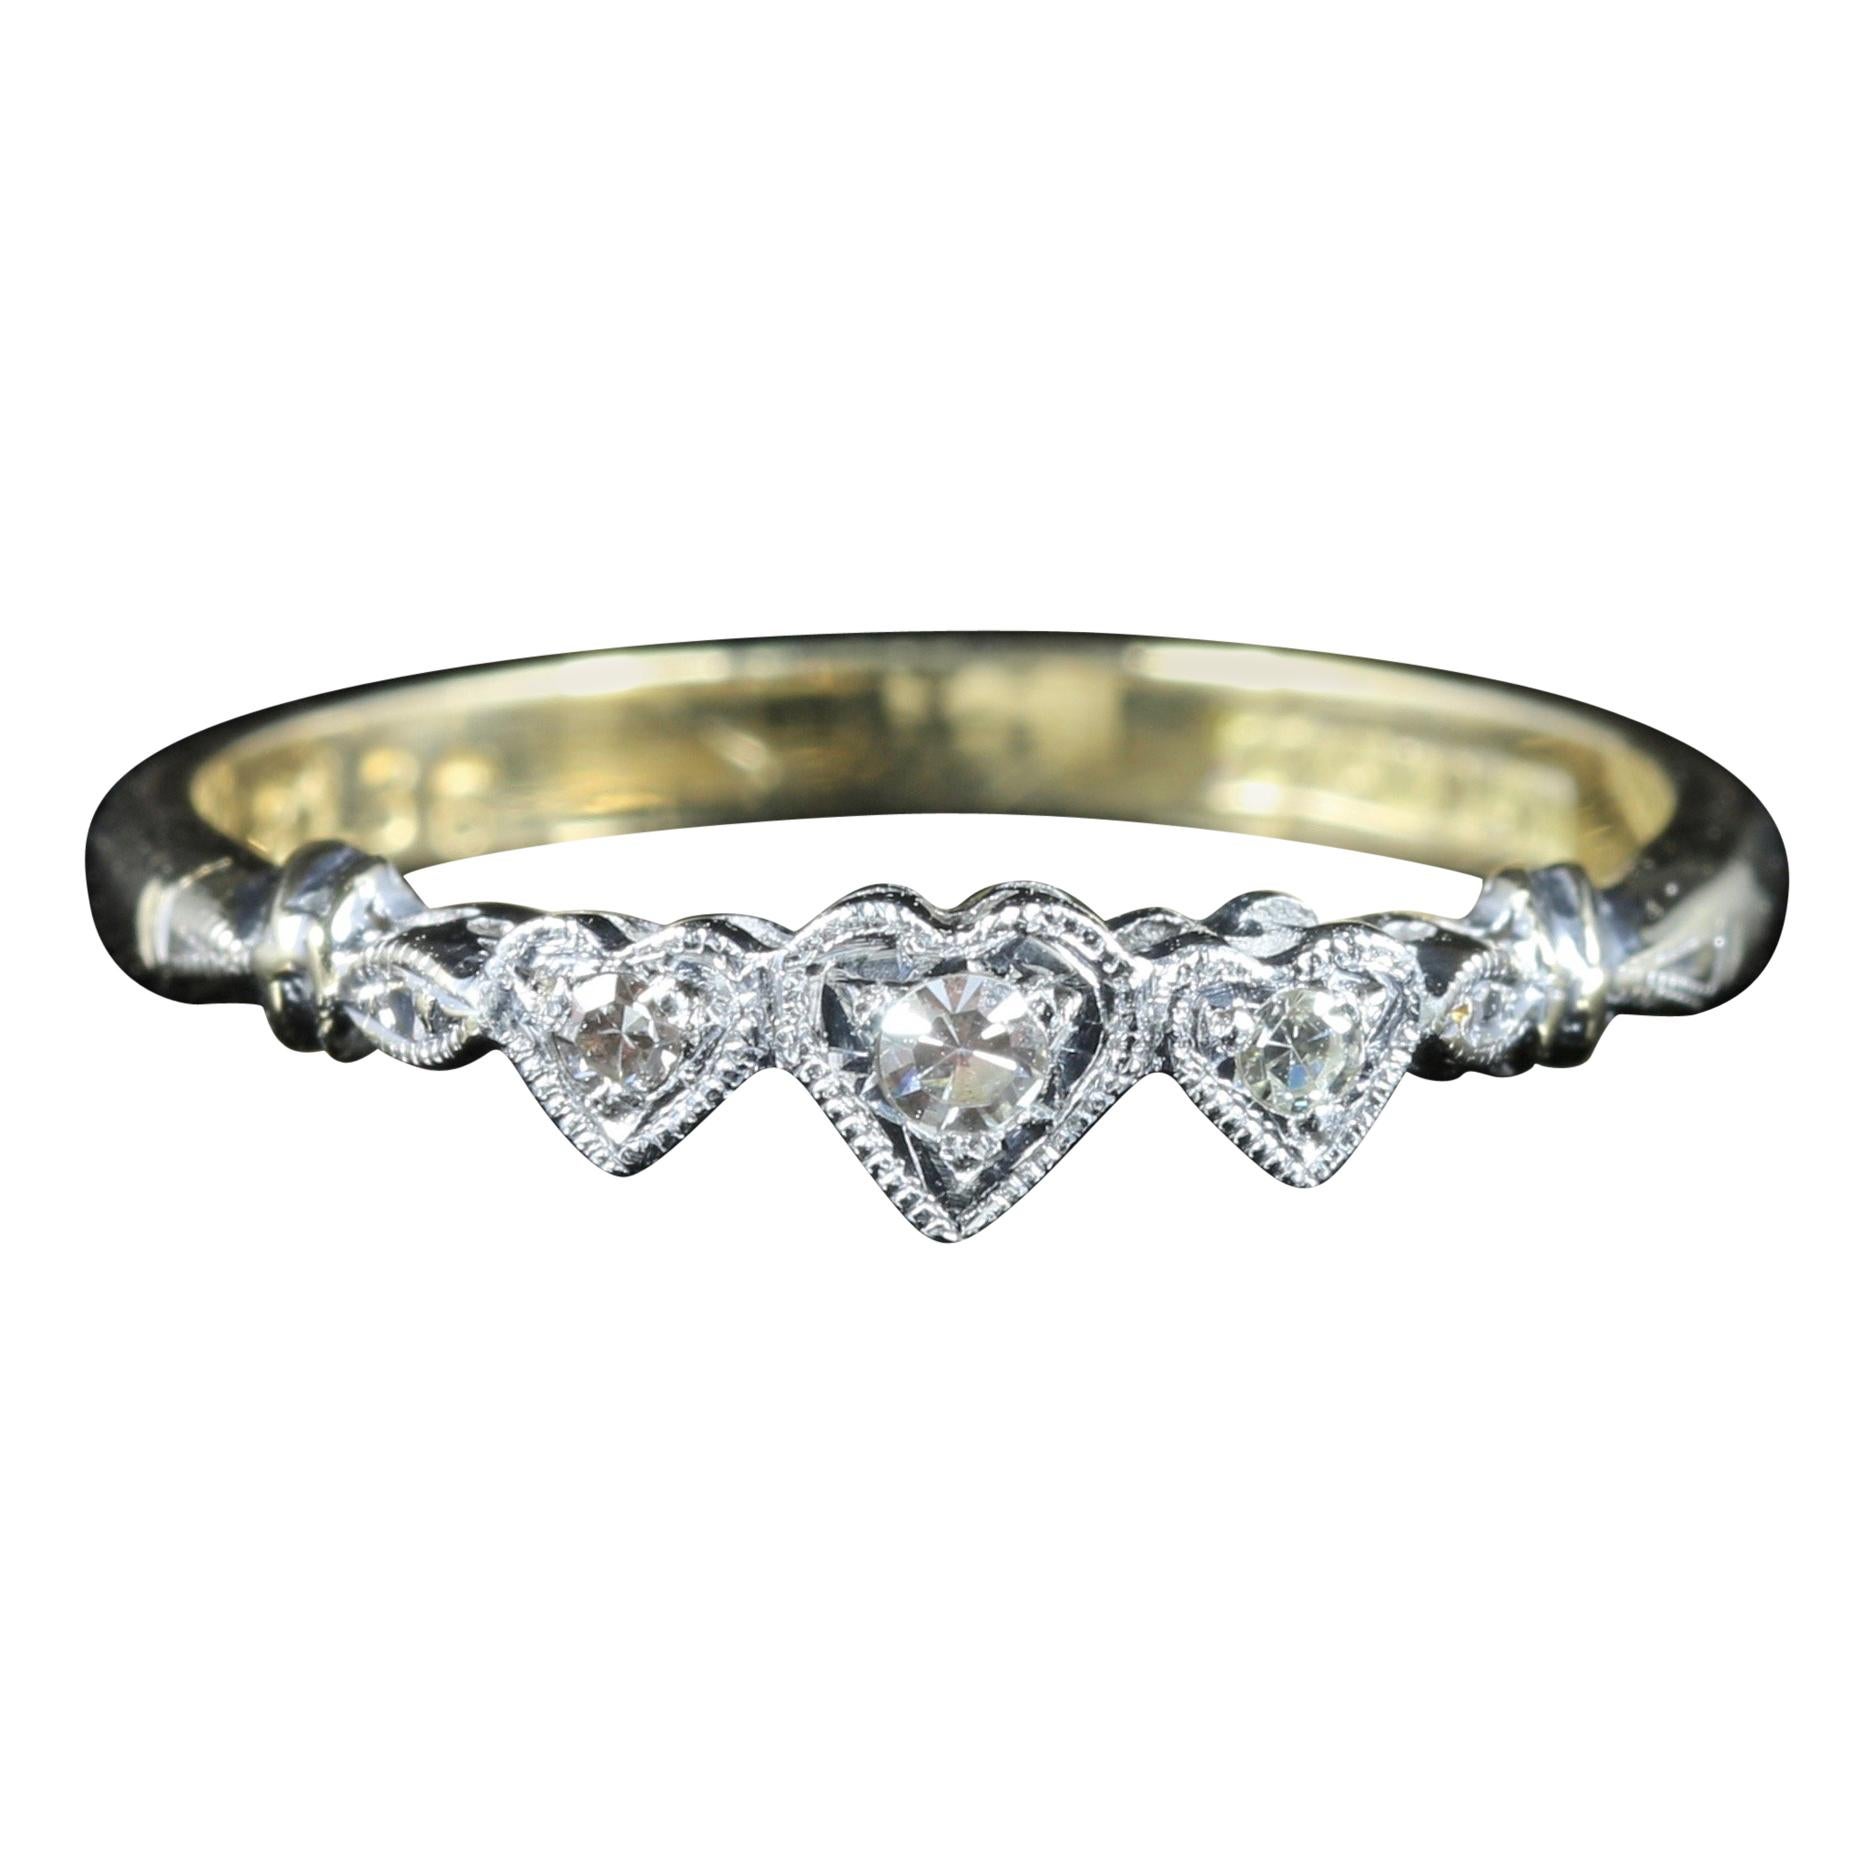 Antique Edwardian Triple Heart Diamond Ring 18 Carat Plat, circa 1915